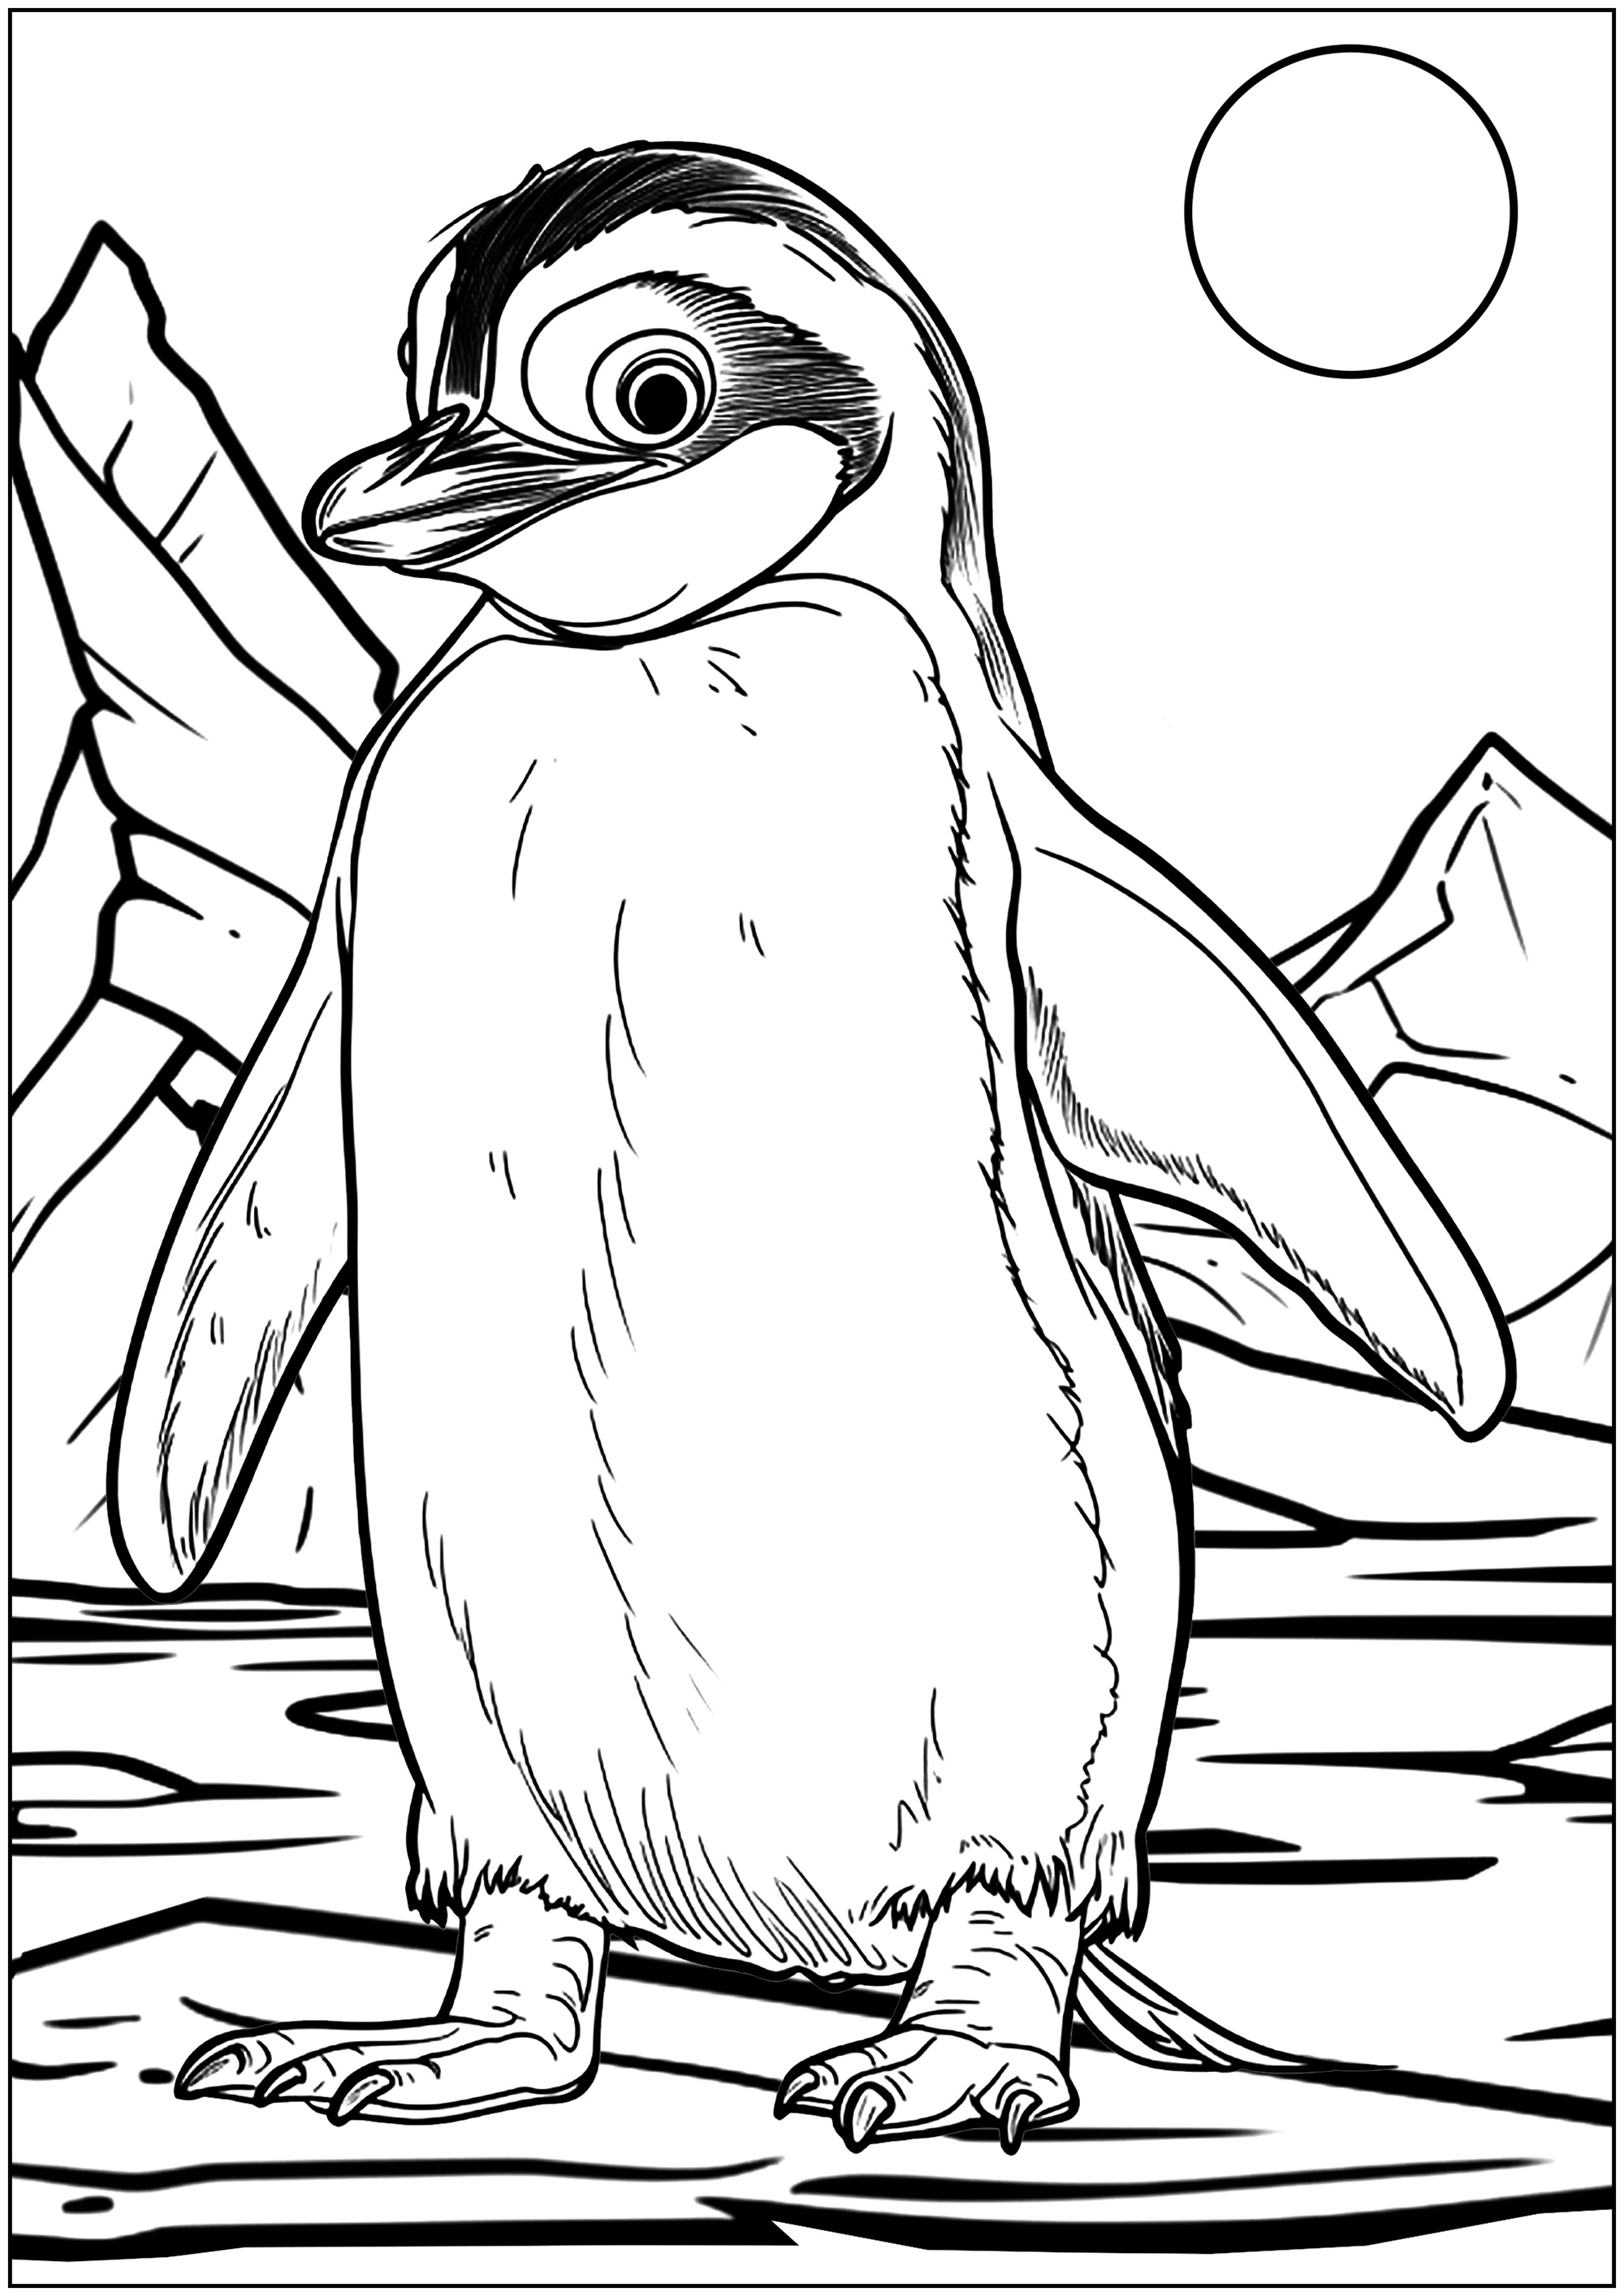 Pinguino sulla banchisa